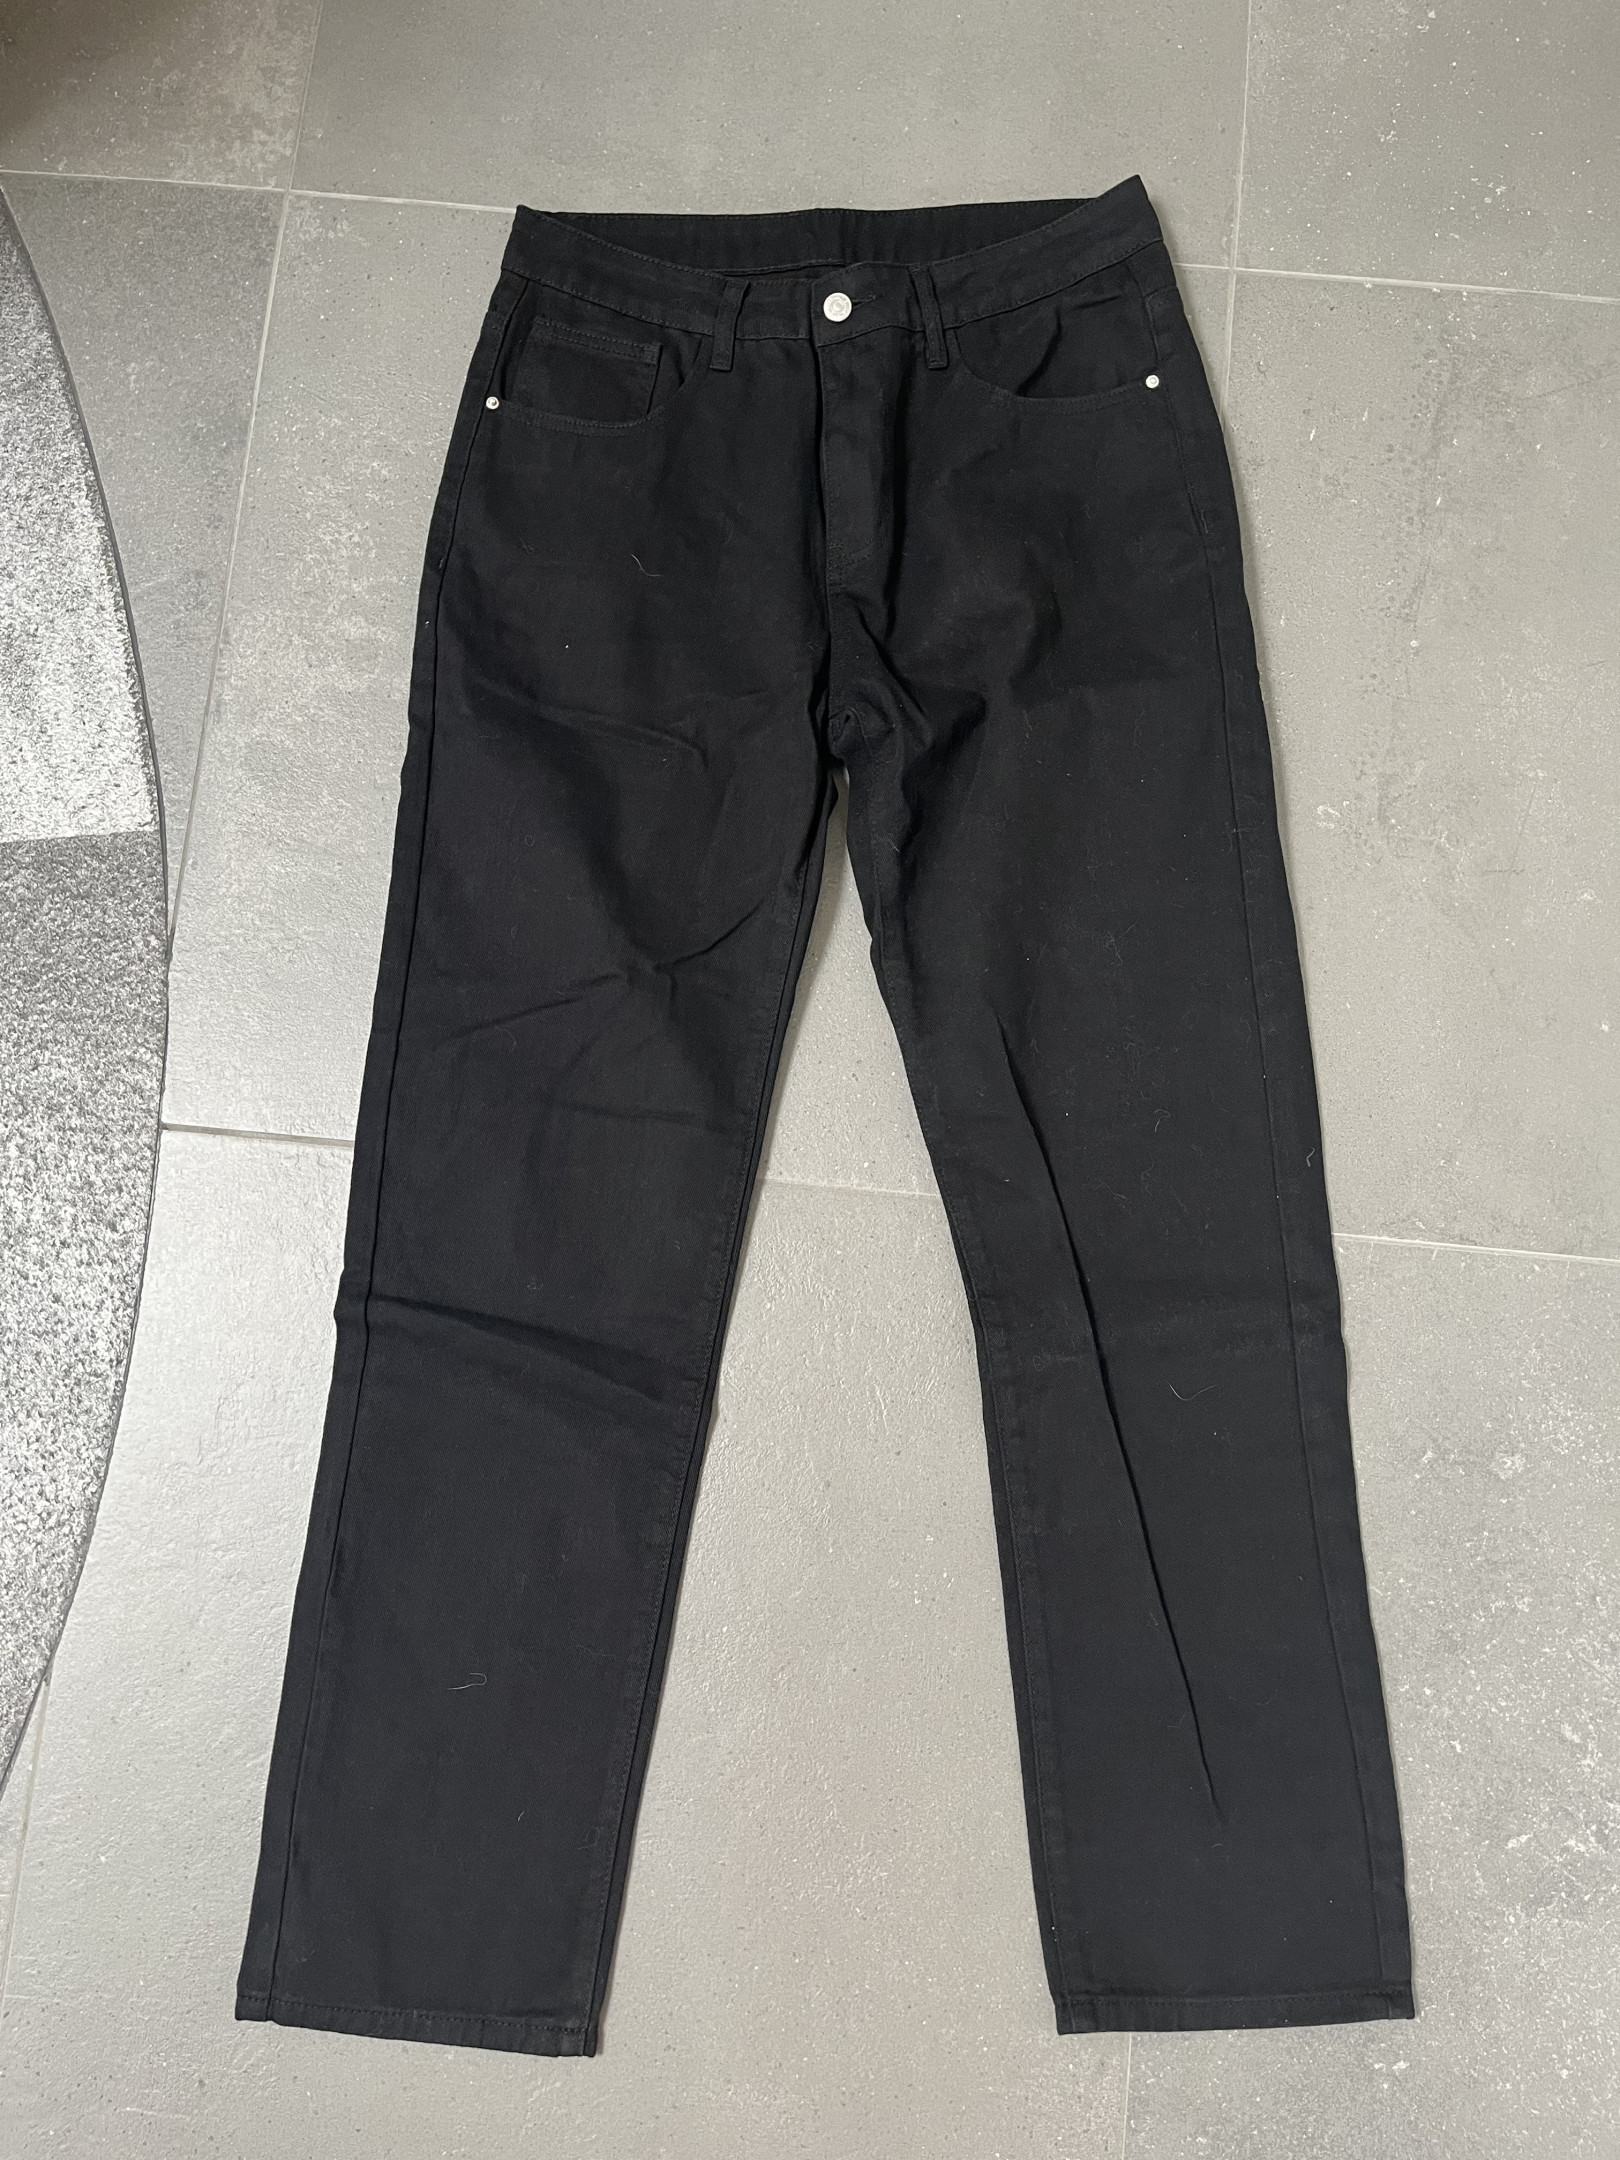 Black trousers M-L